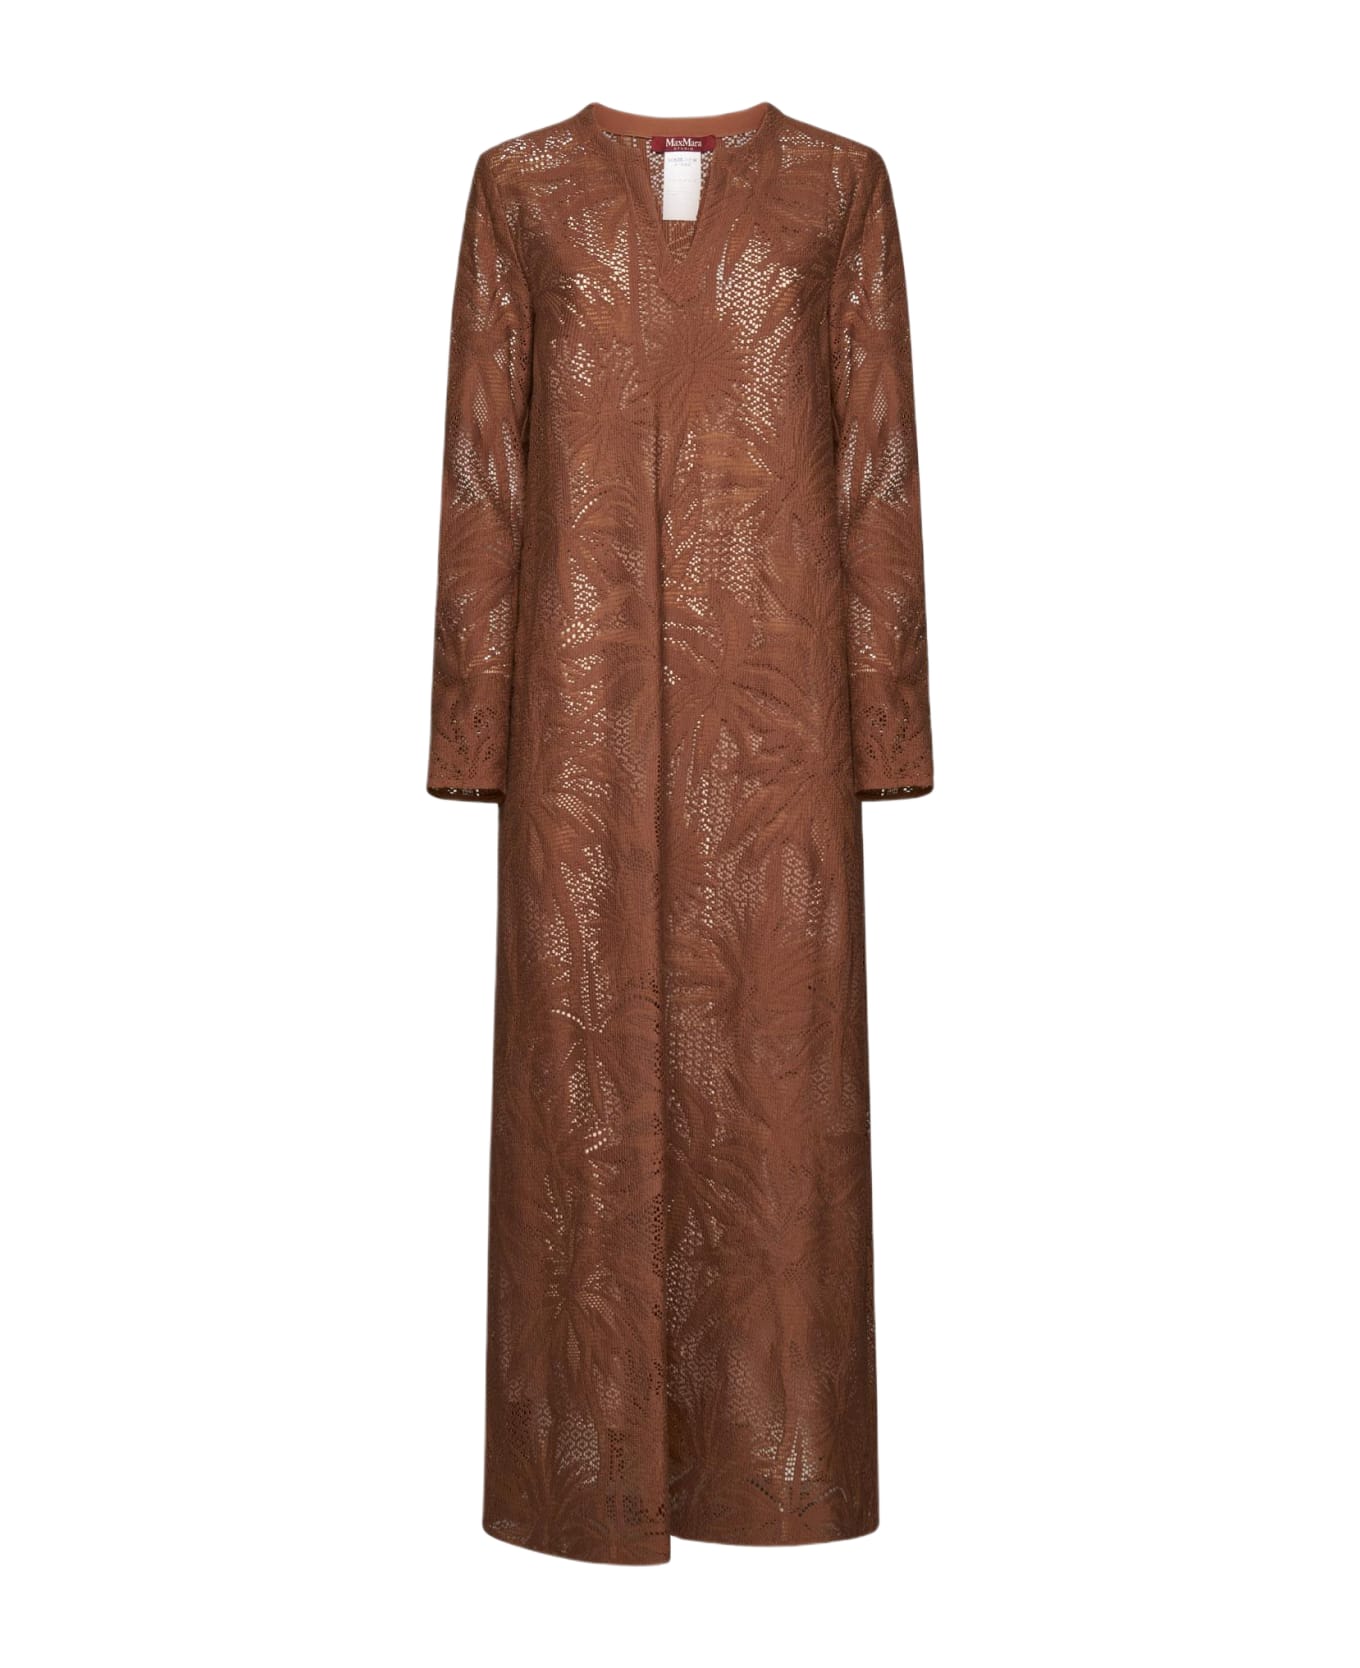 Max Mara Studio Harden Palm Lace Long Dress - Brown